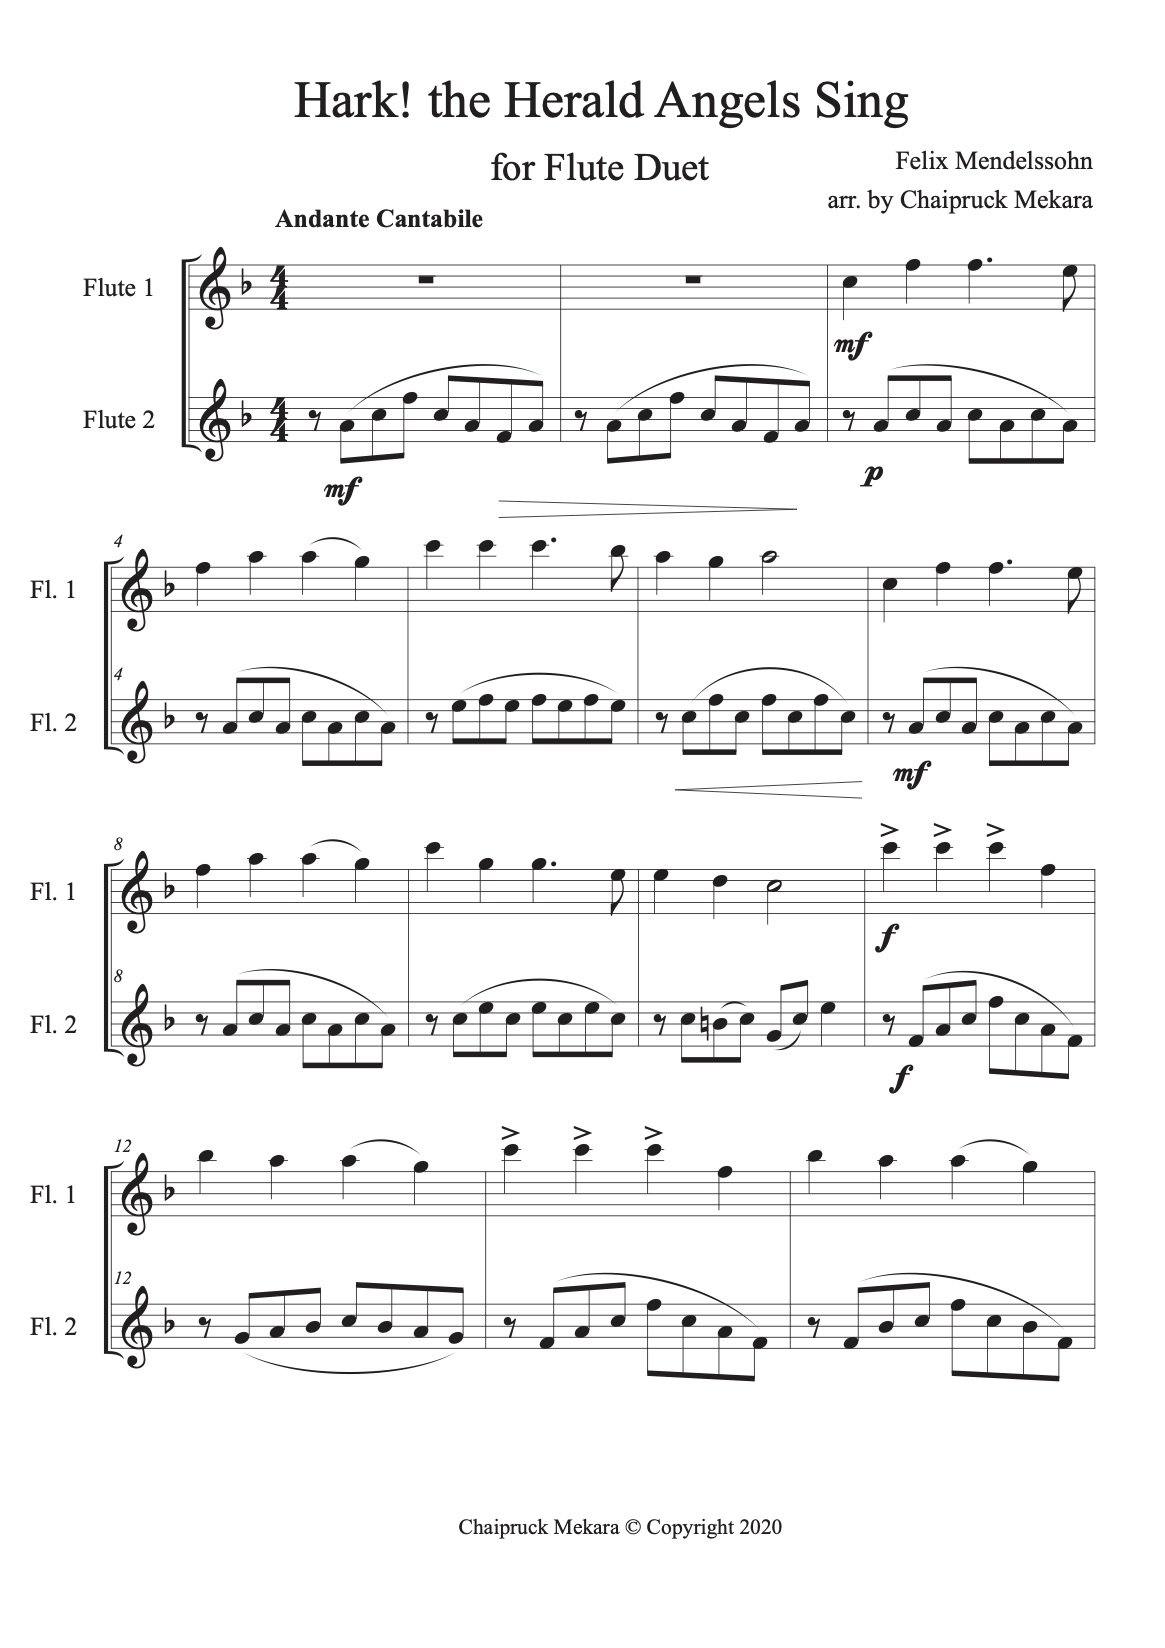 Hark! the Herald Angels Sing for Flute Duet (score+part) - ChaipruckMekara